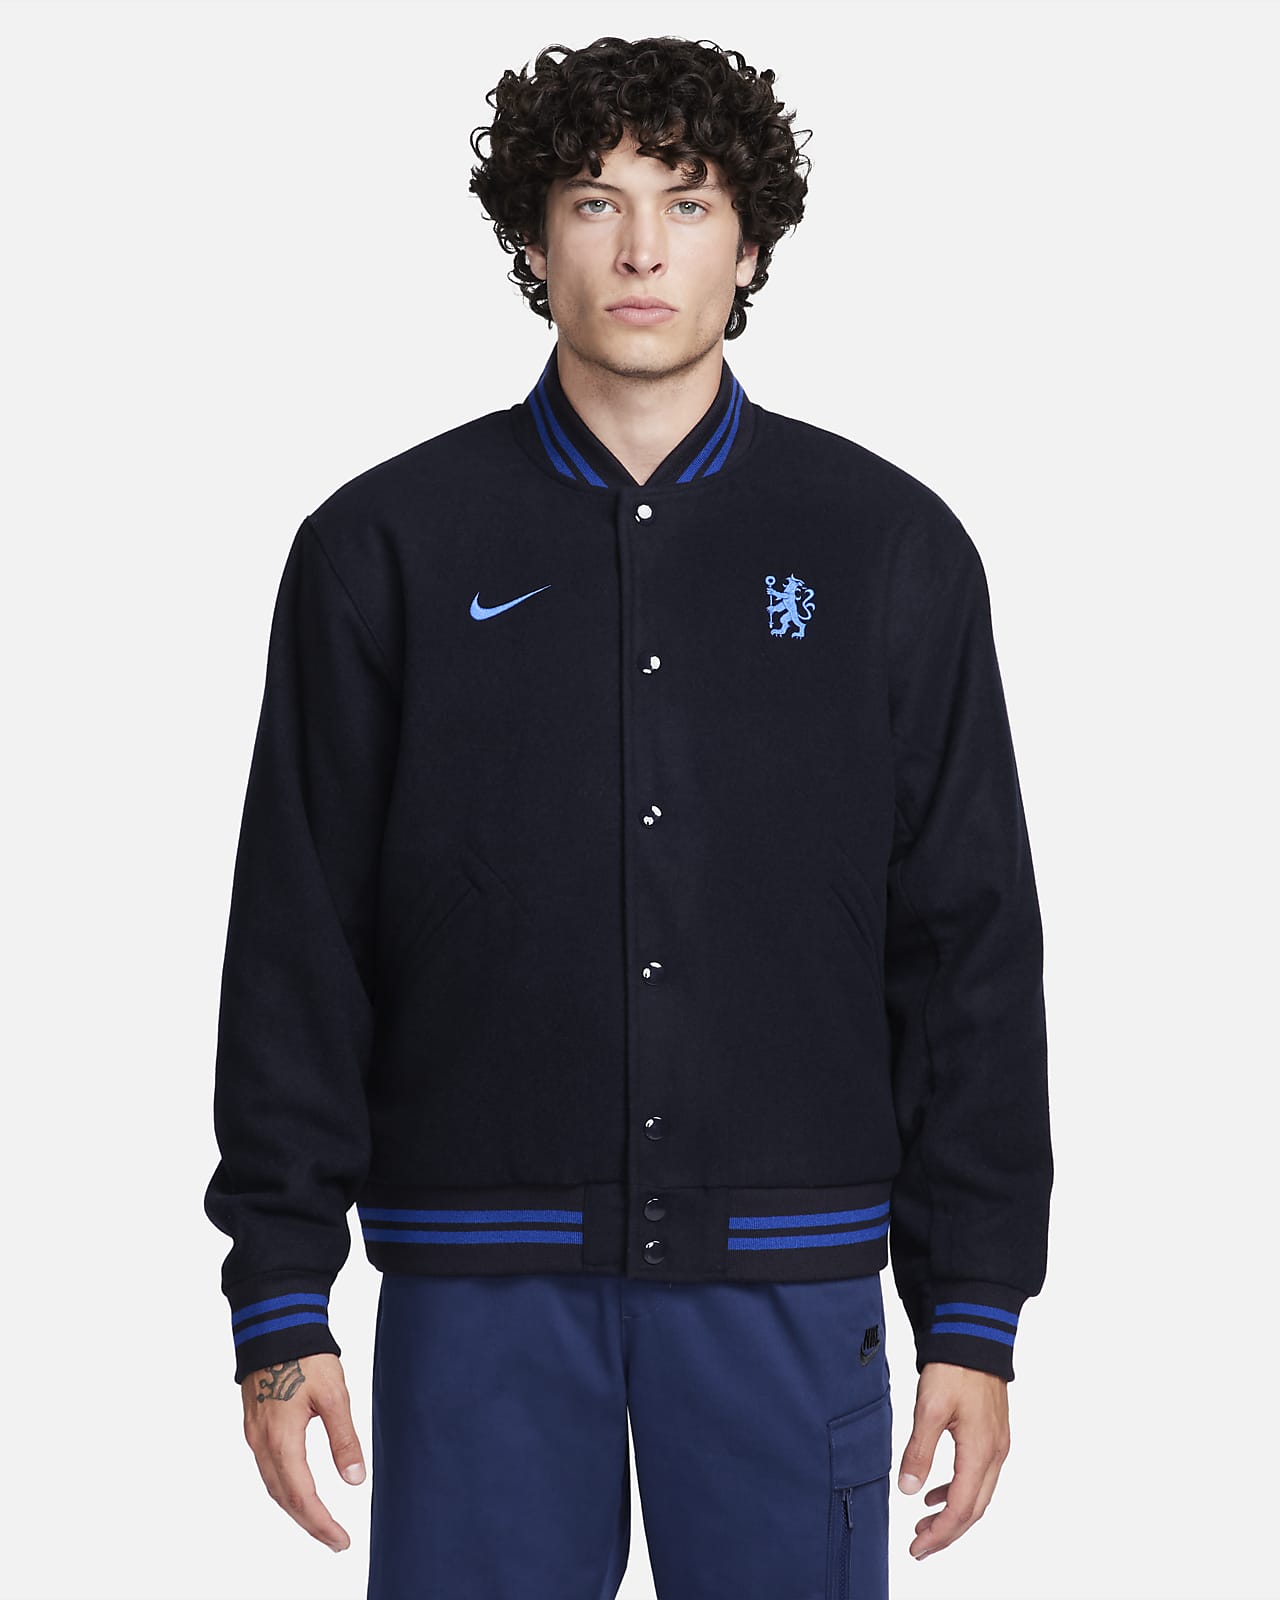 Chelsea F.C. Men's Nike Football Varsity Jacket